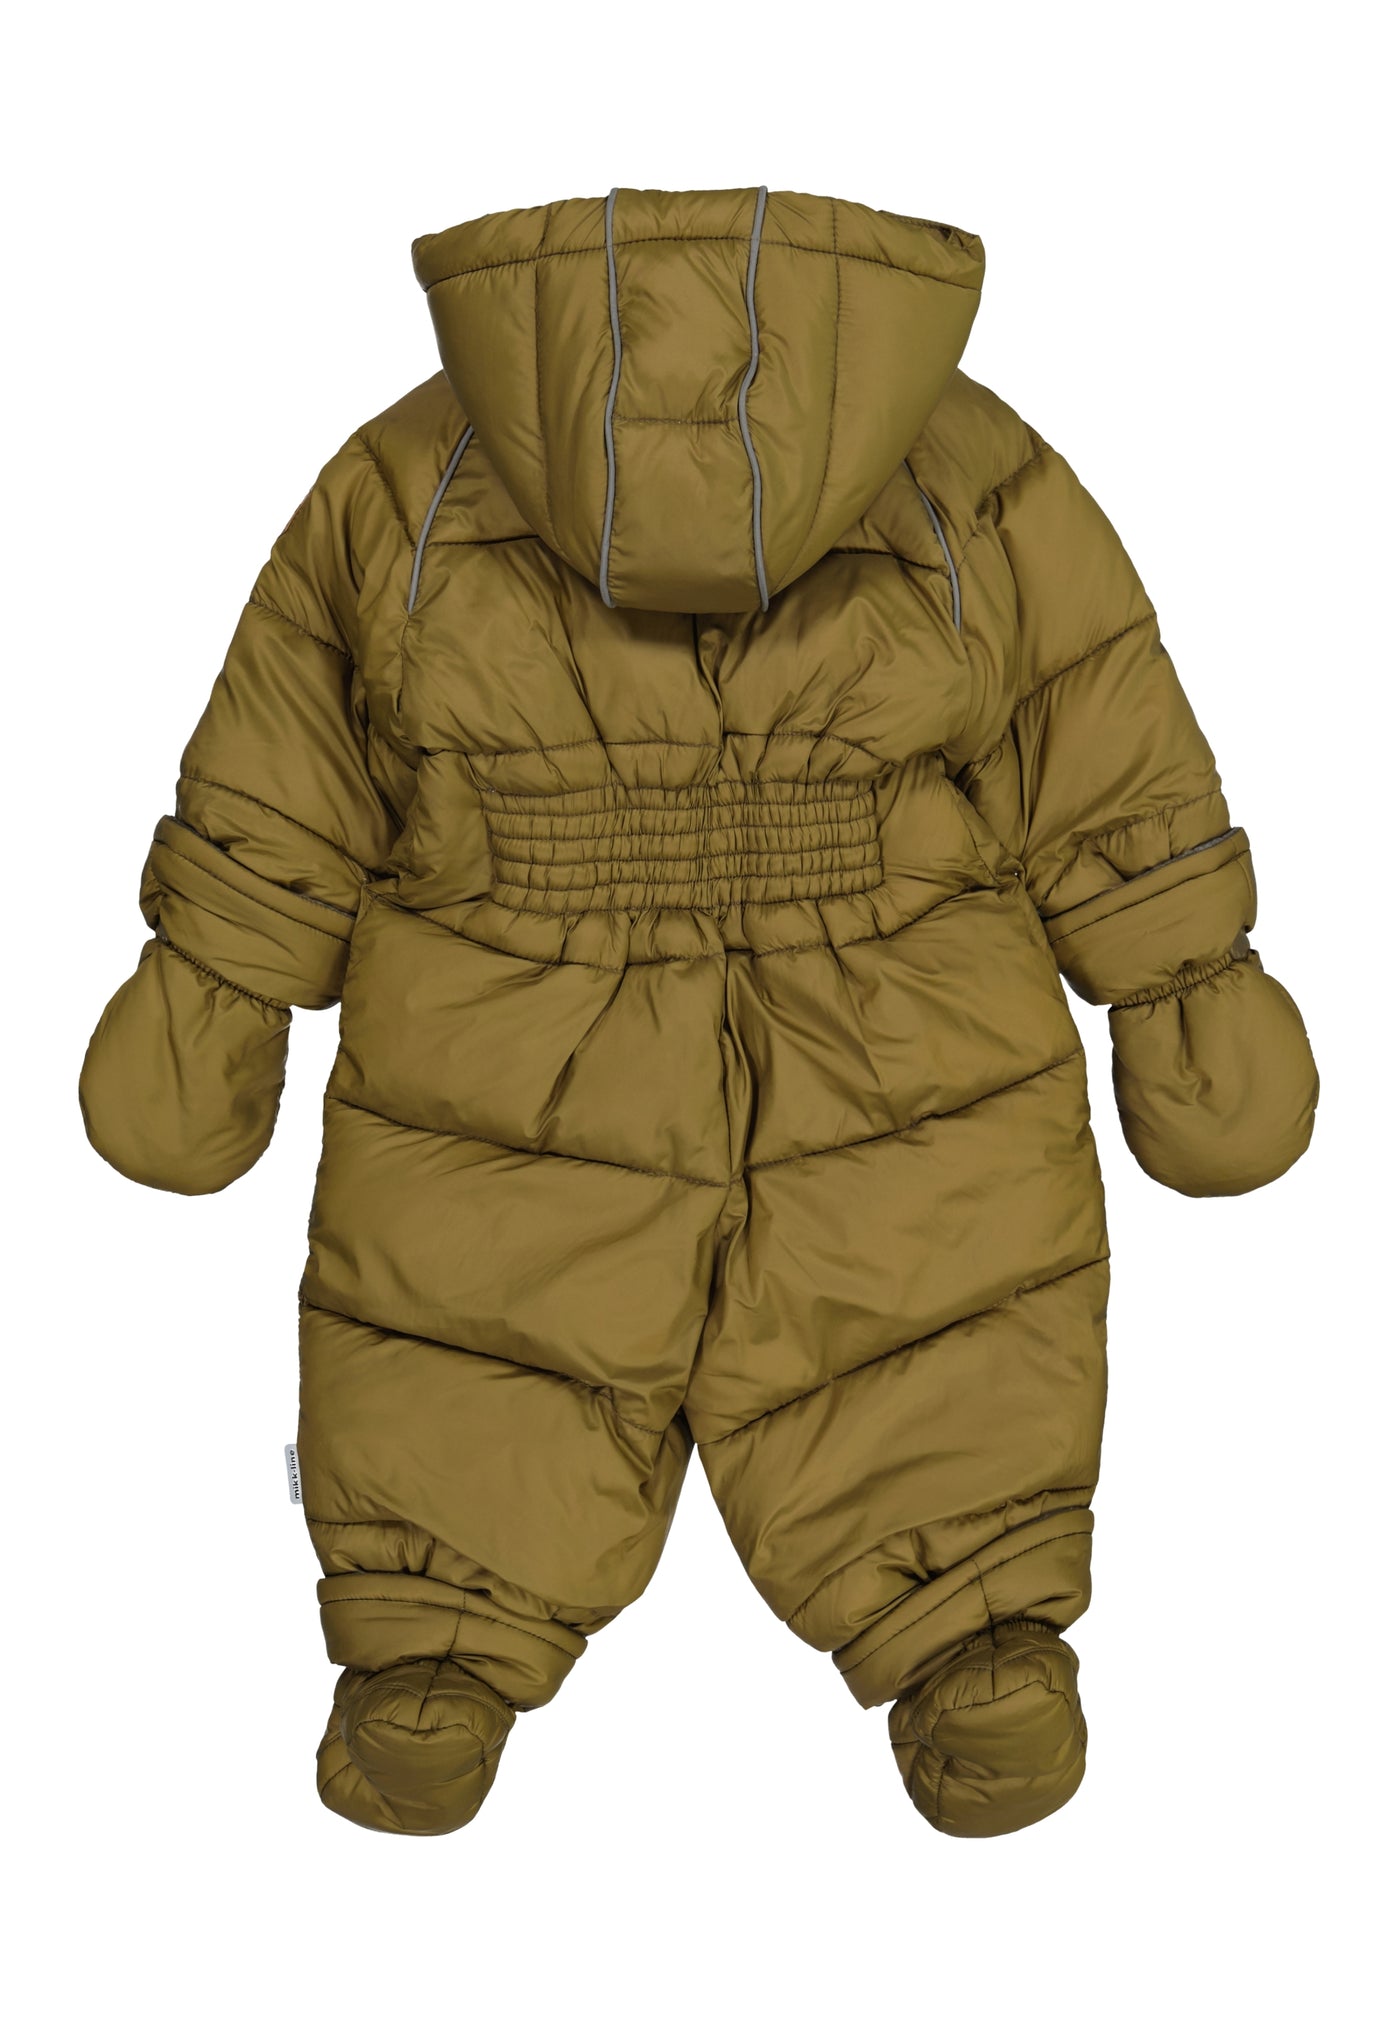 Kuldagalli, Puff Baby suit - Beech